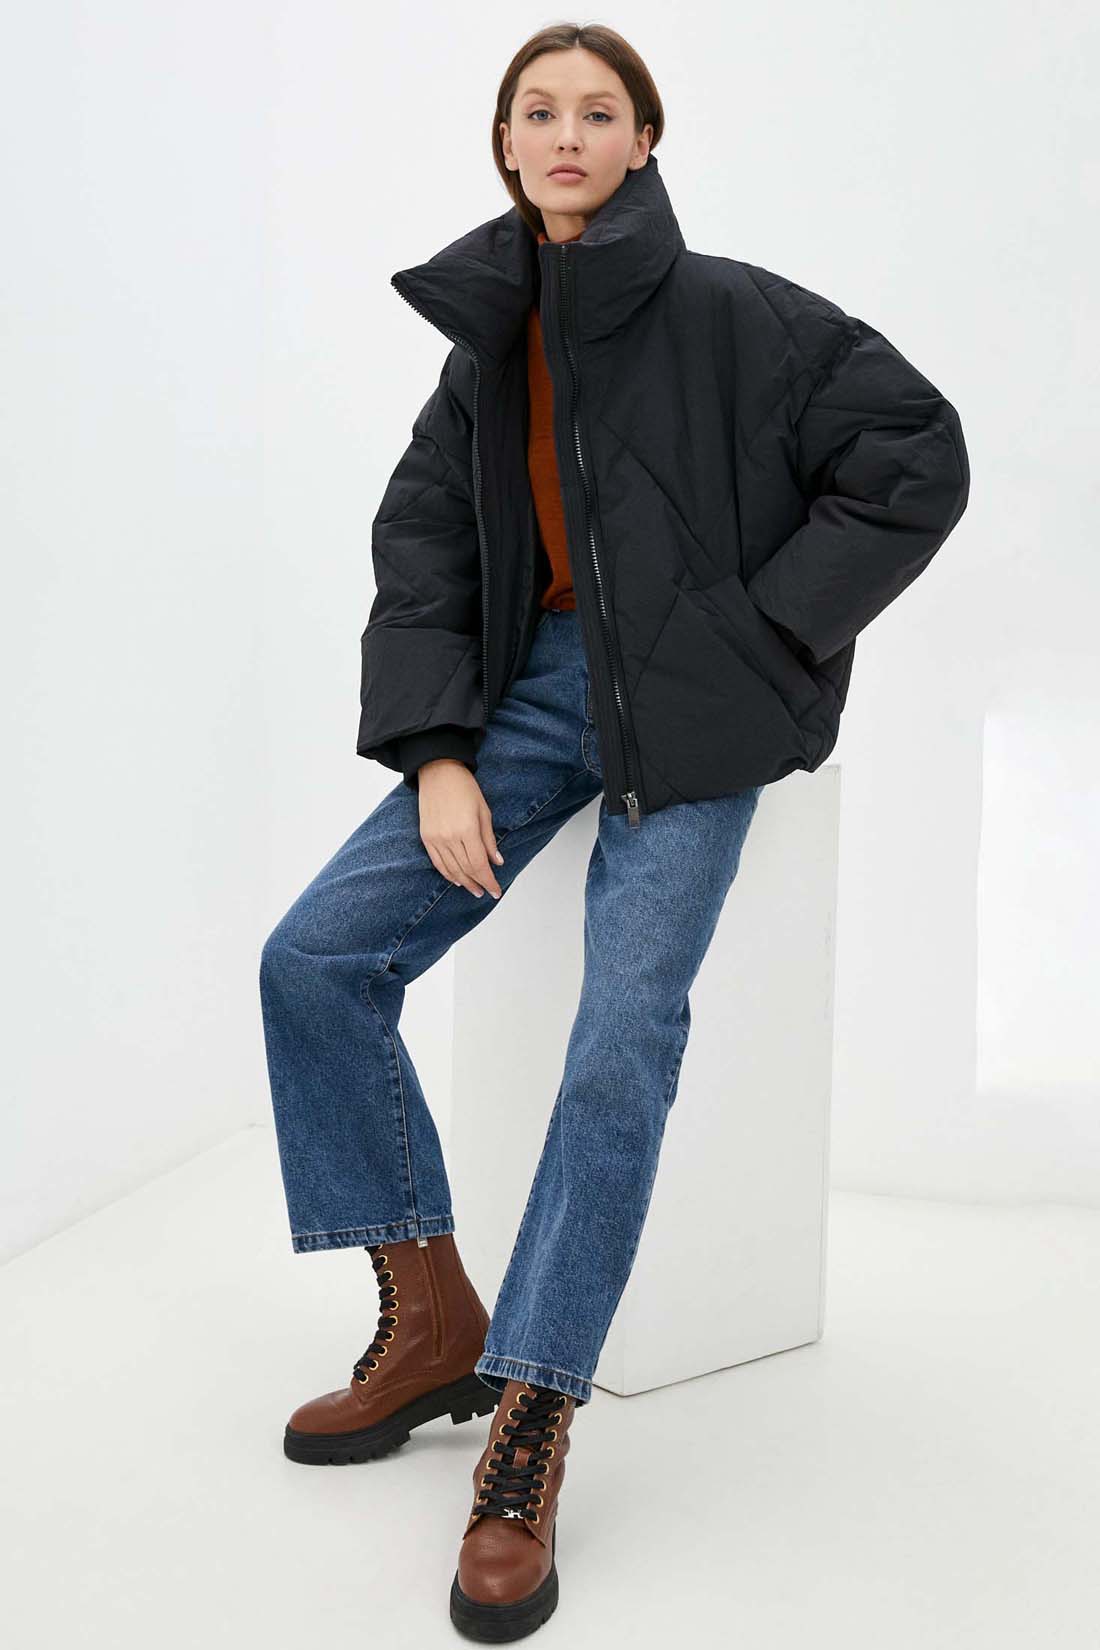 Куртка (Эко пух) (арт. baon B041518), размер S, цвет черный Куртка (Эко пух) (арт. baon B041518) - фото 5